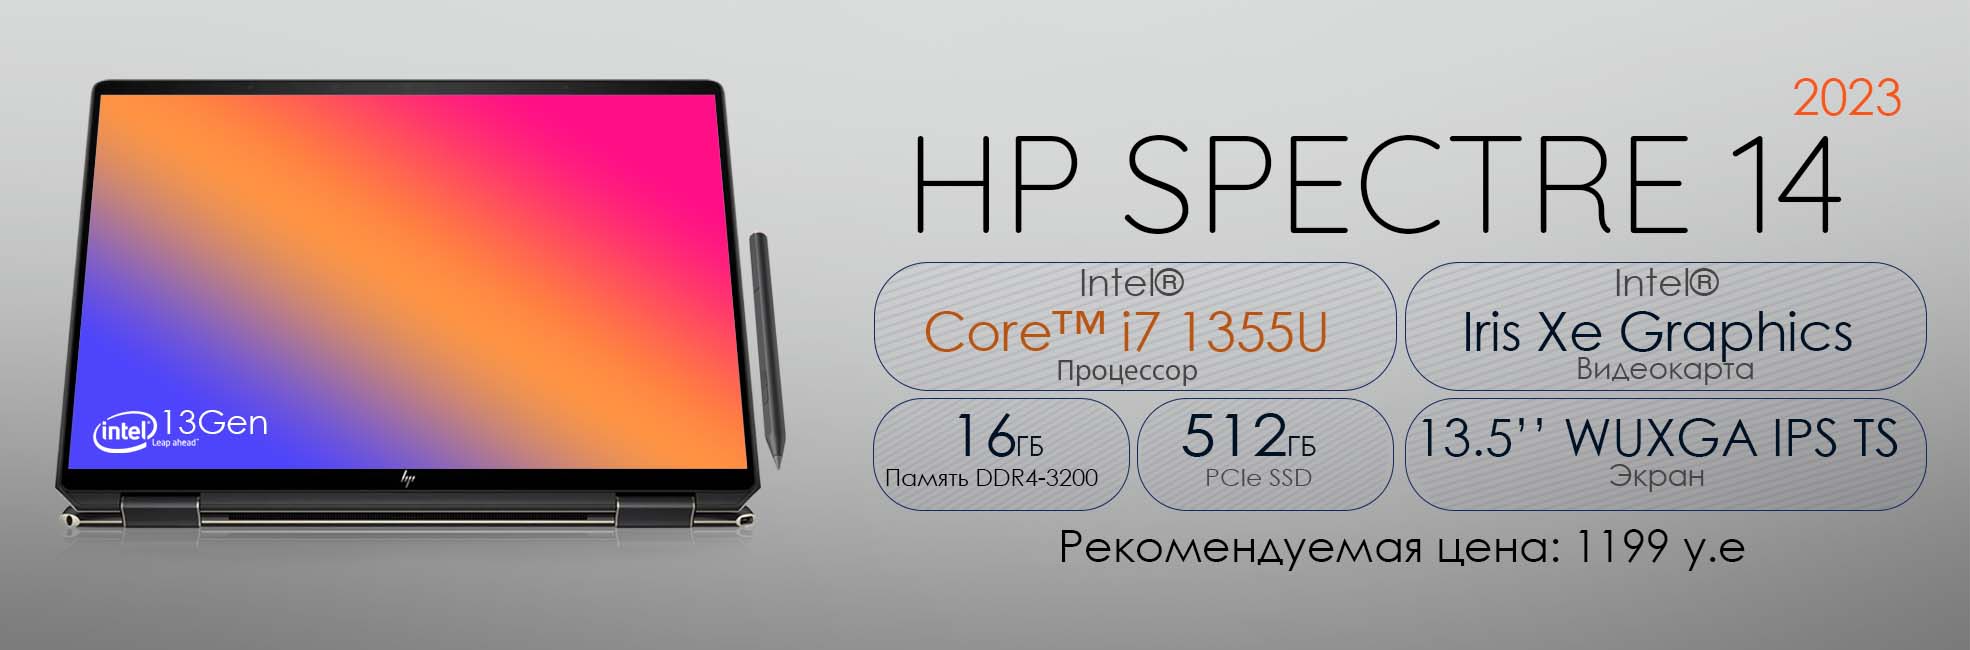 Spectre 14 2023 1970x650 1 Hp Spectre - Ноутбуки HP Спектр